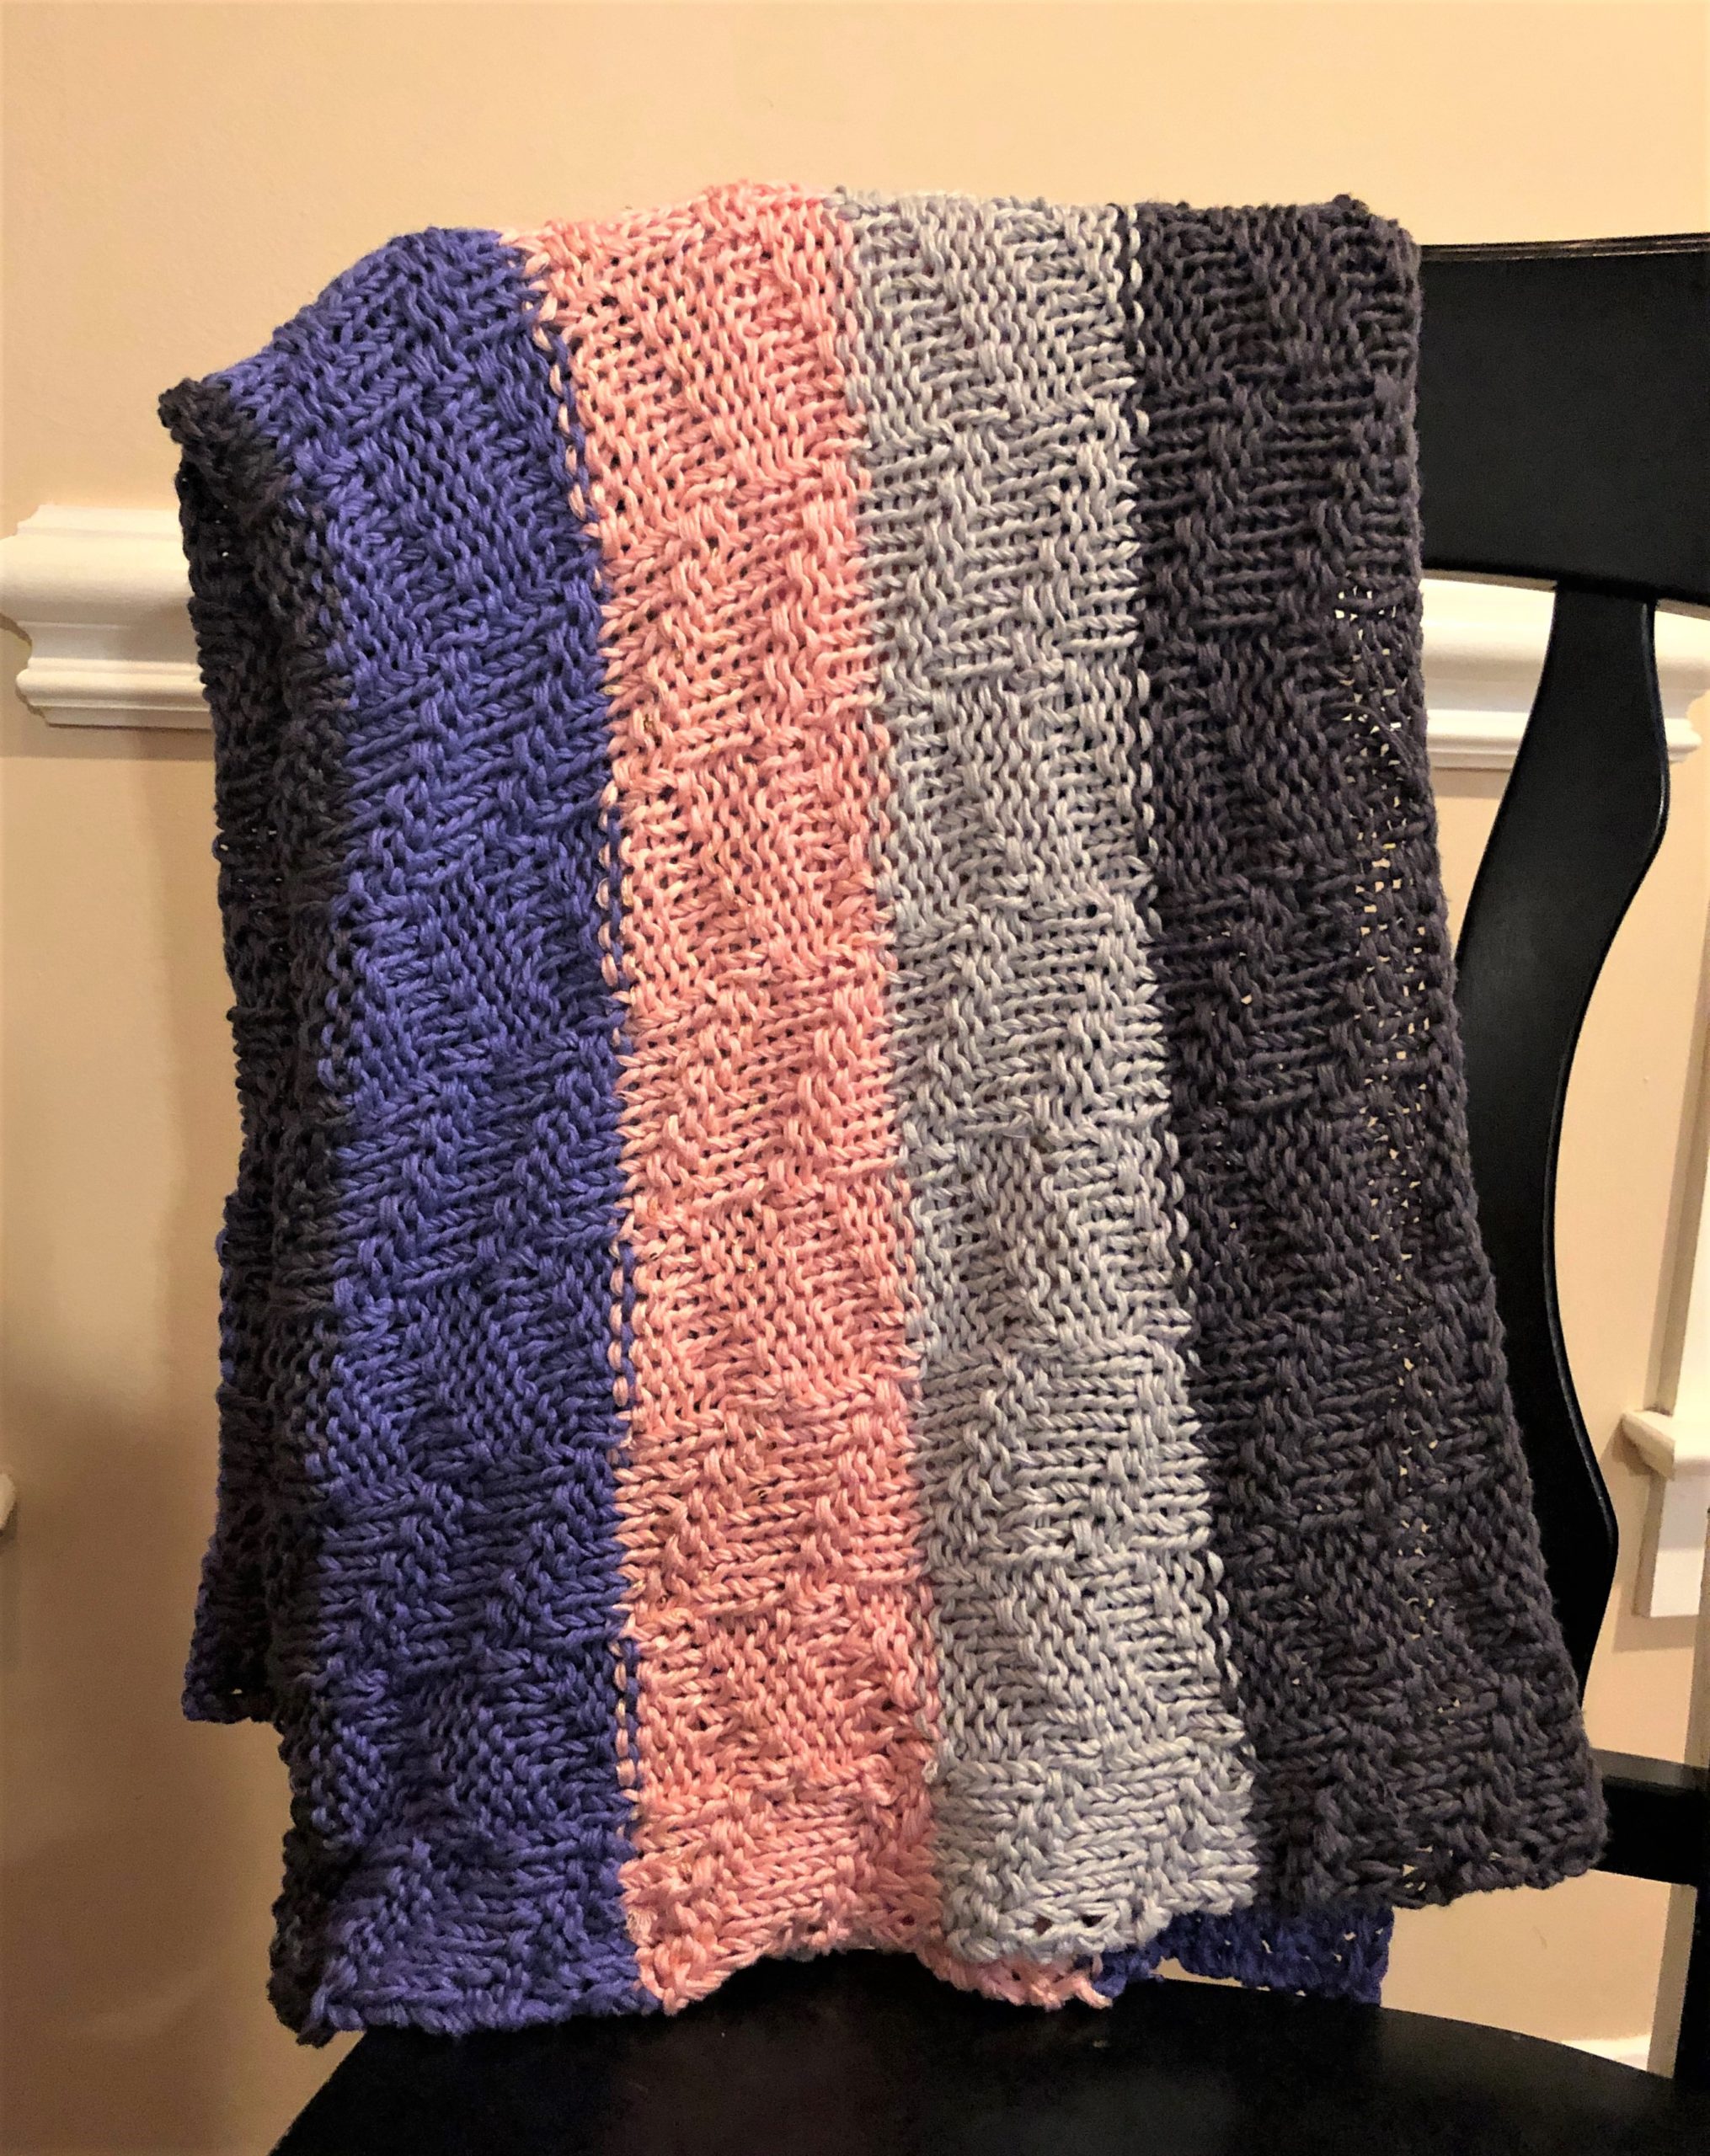 Newcastle Baby Blanket [Knitting Pattern] - At Yarn's Length